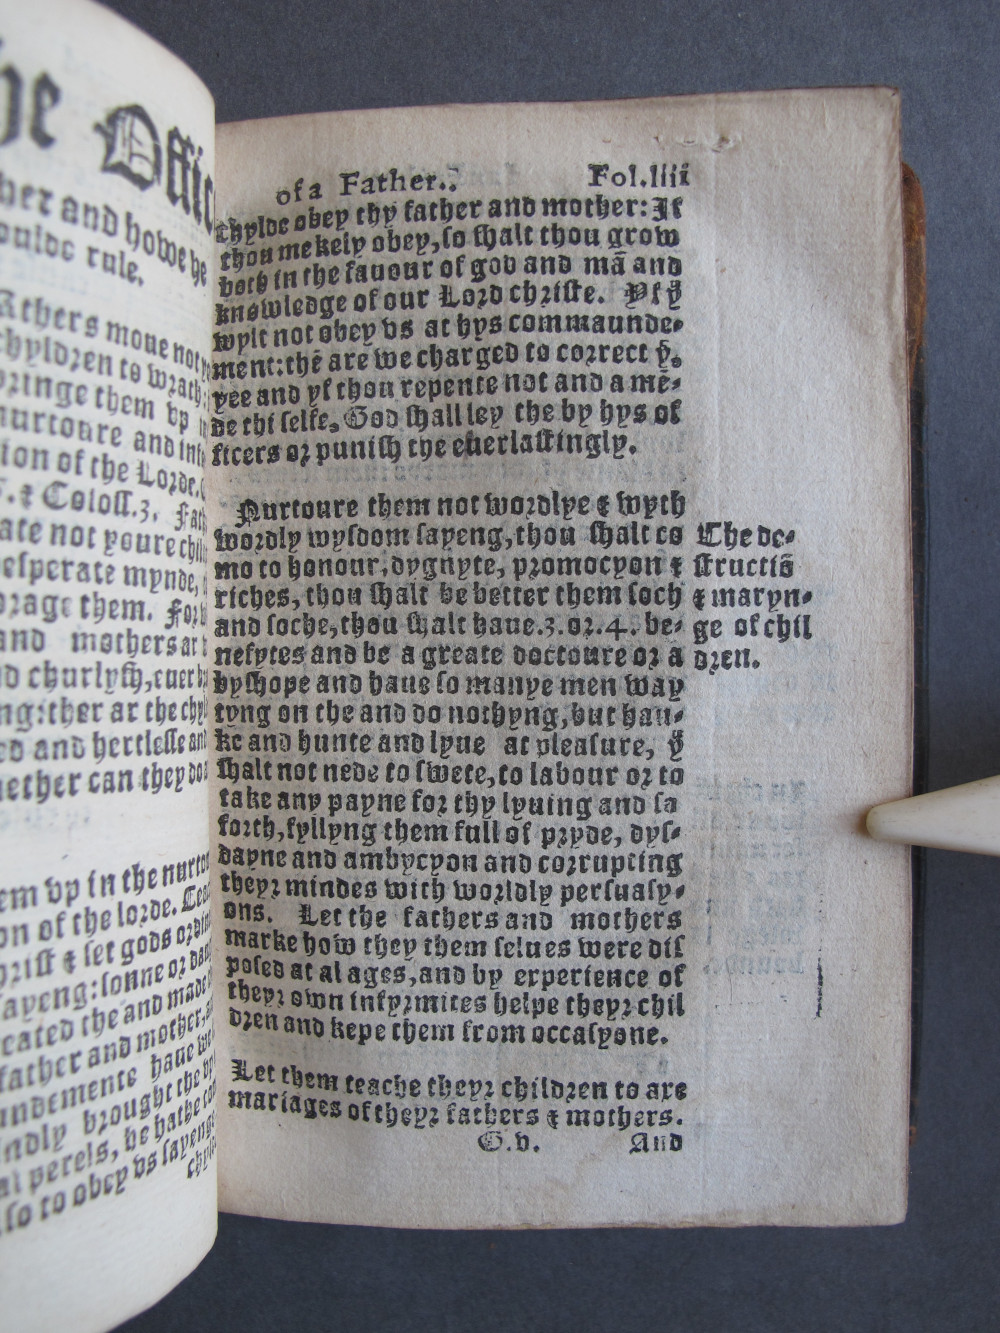 1 Folio G5 recto